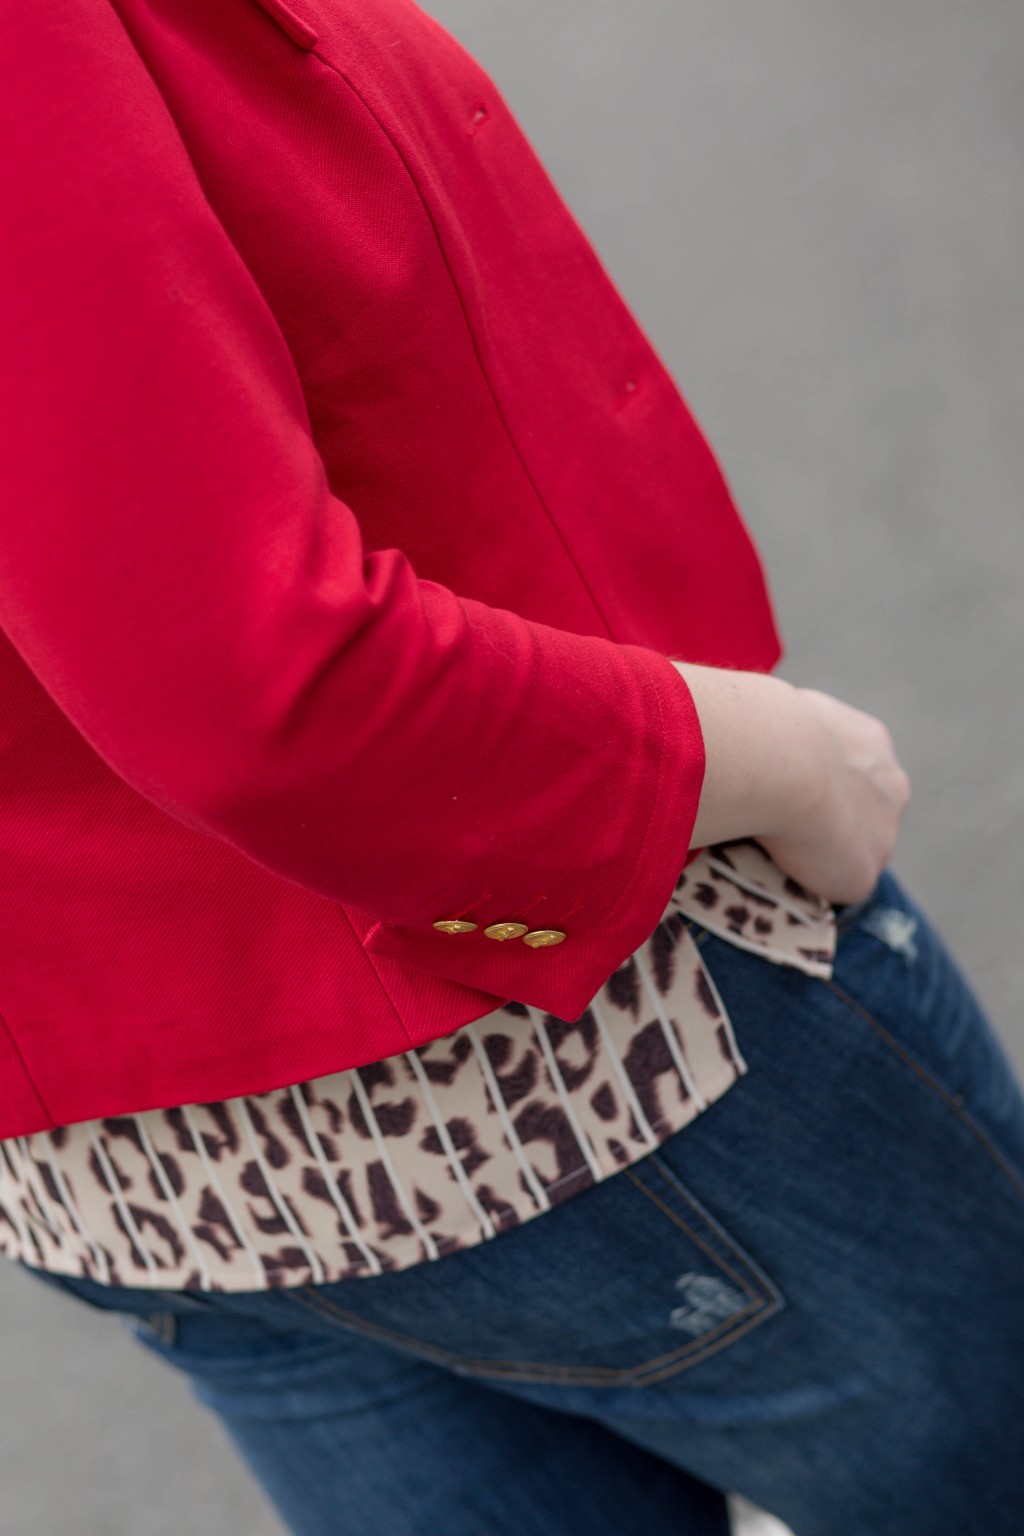 5 - structured red jacket details